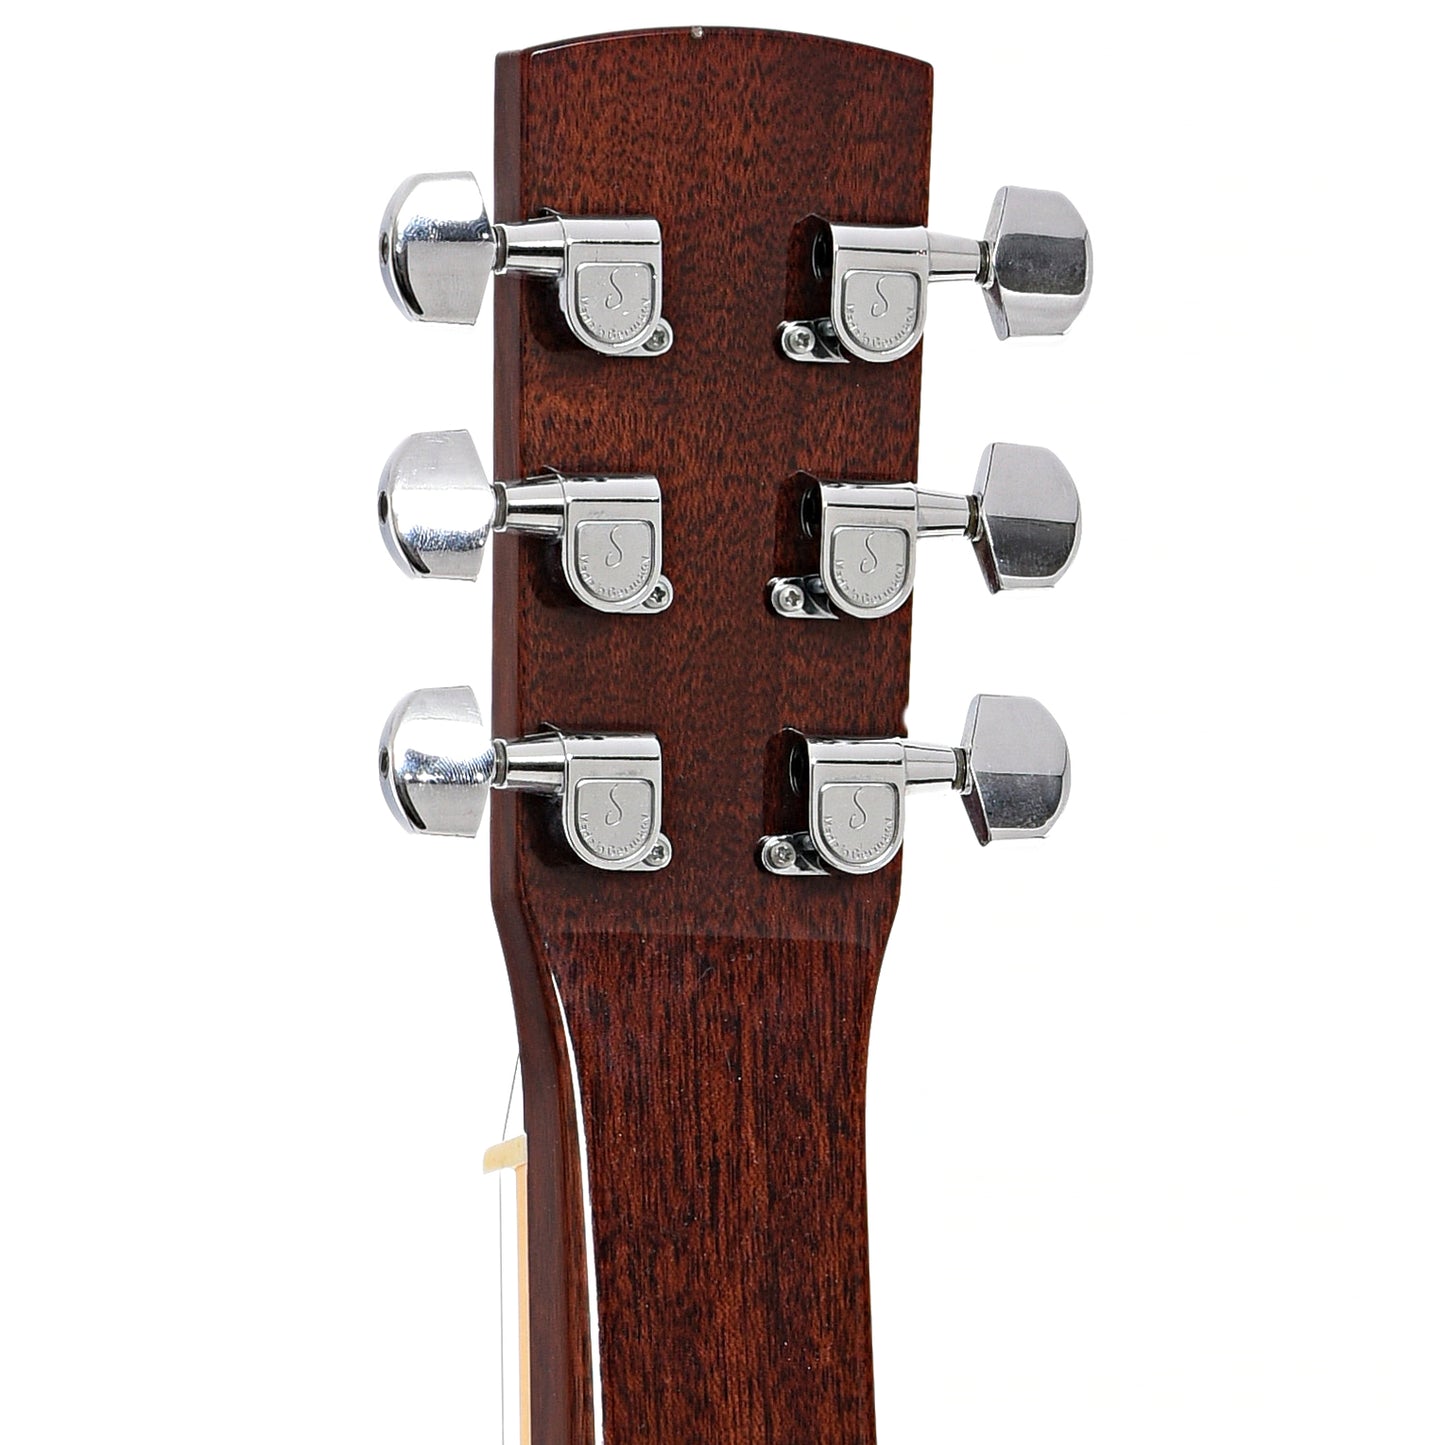 Back headstock of Beard Vintage R Squareneck Resonator Guitar